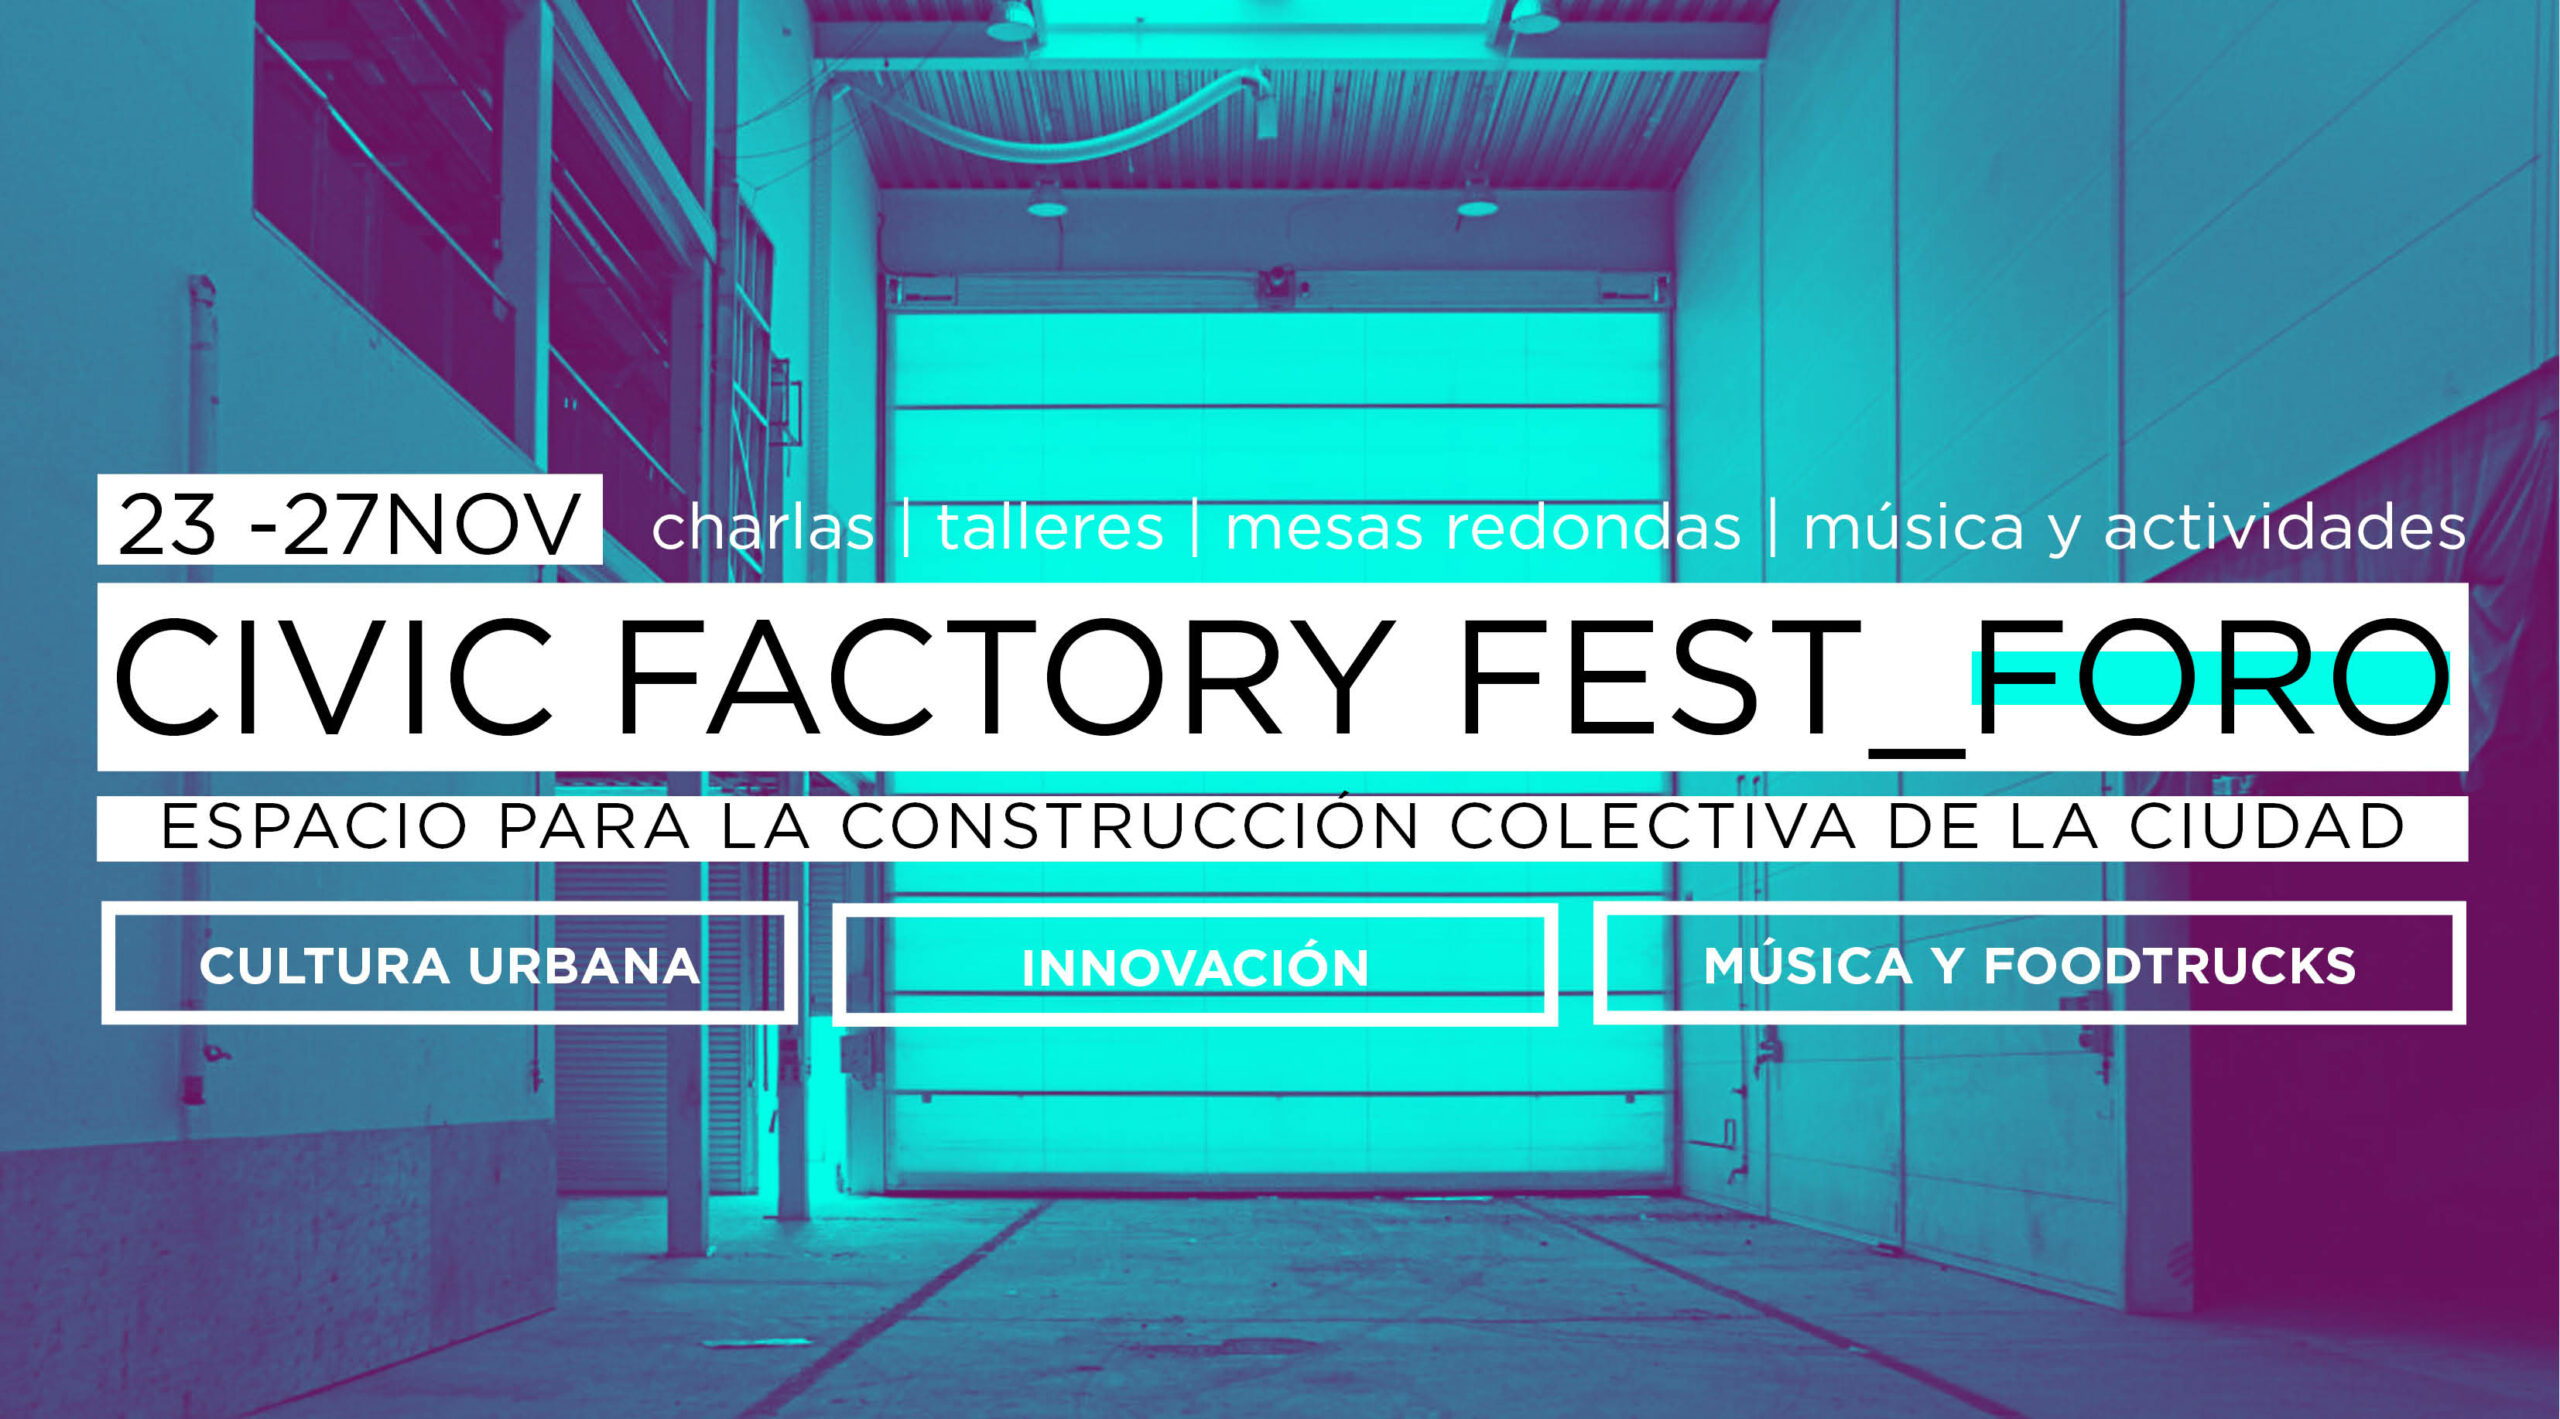 Civic Factory Fest Valencia